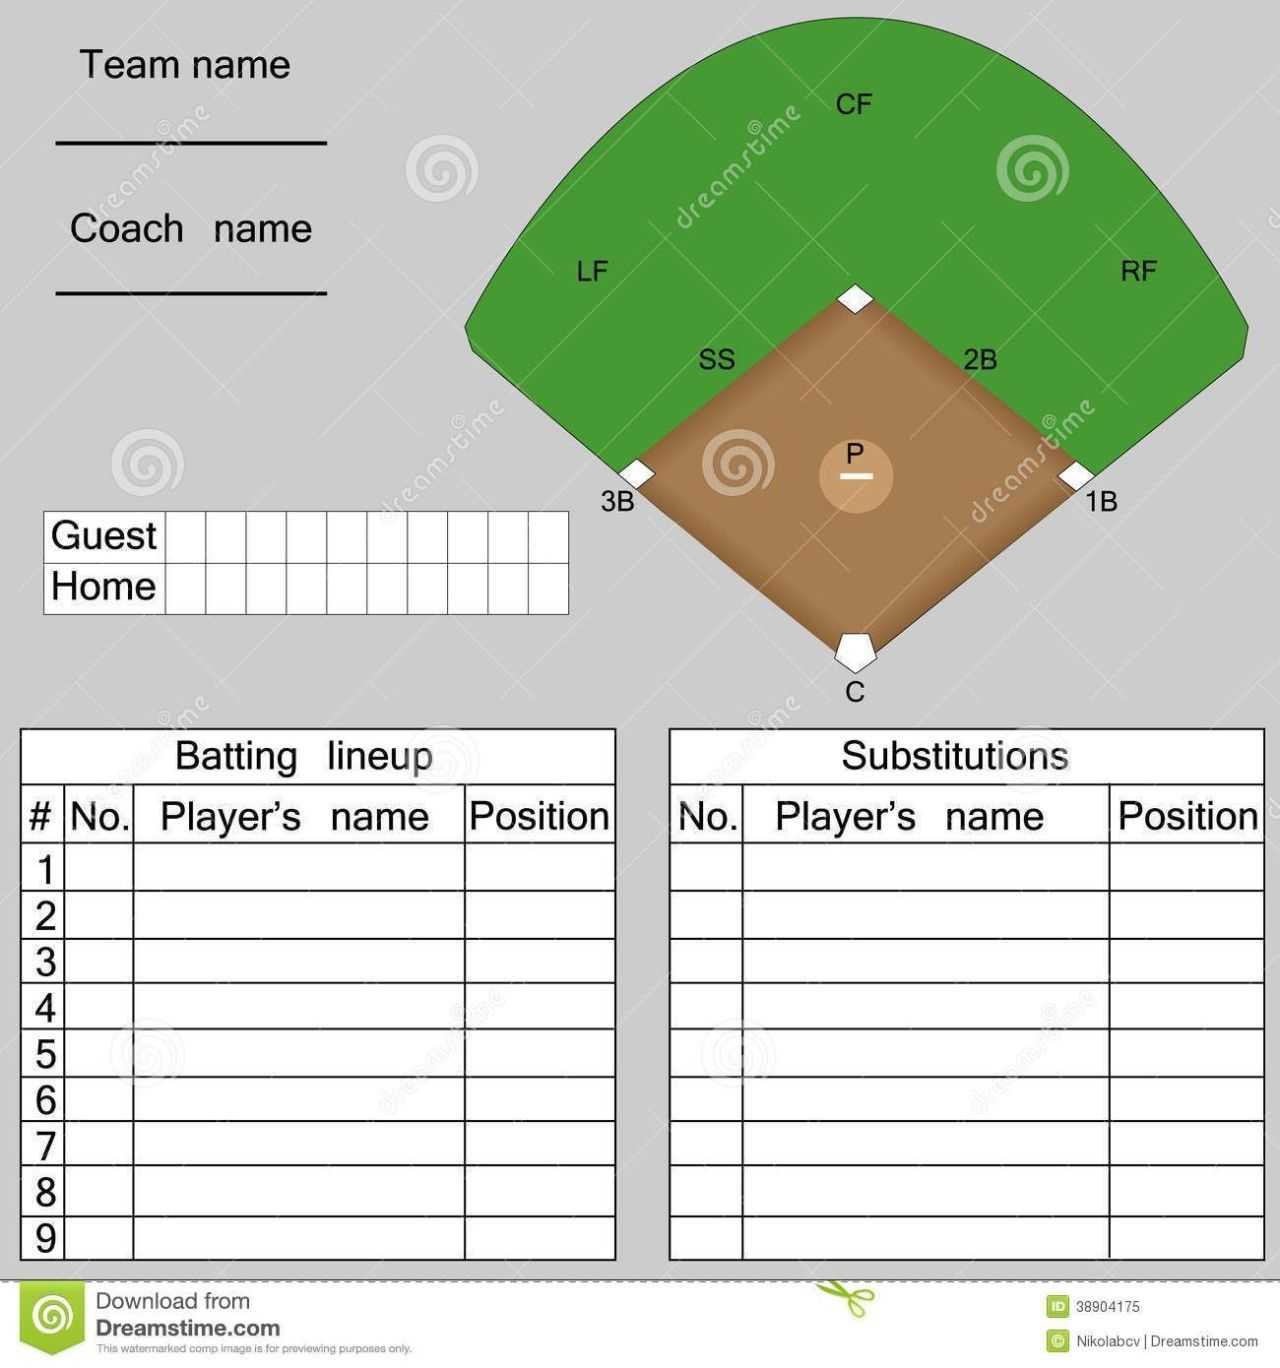 Baseball Lineup Card Template – Free Download | Baseball With Regard To Dugout Lineup Card Template